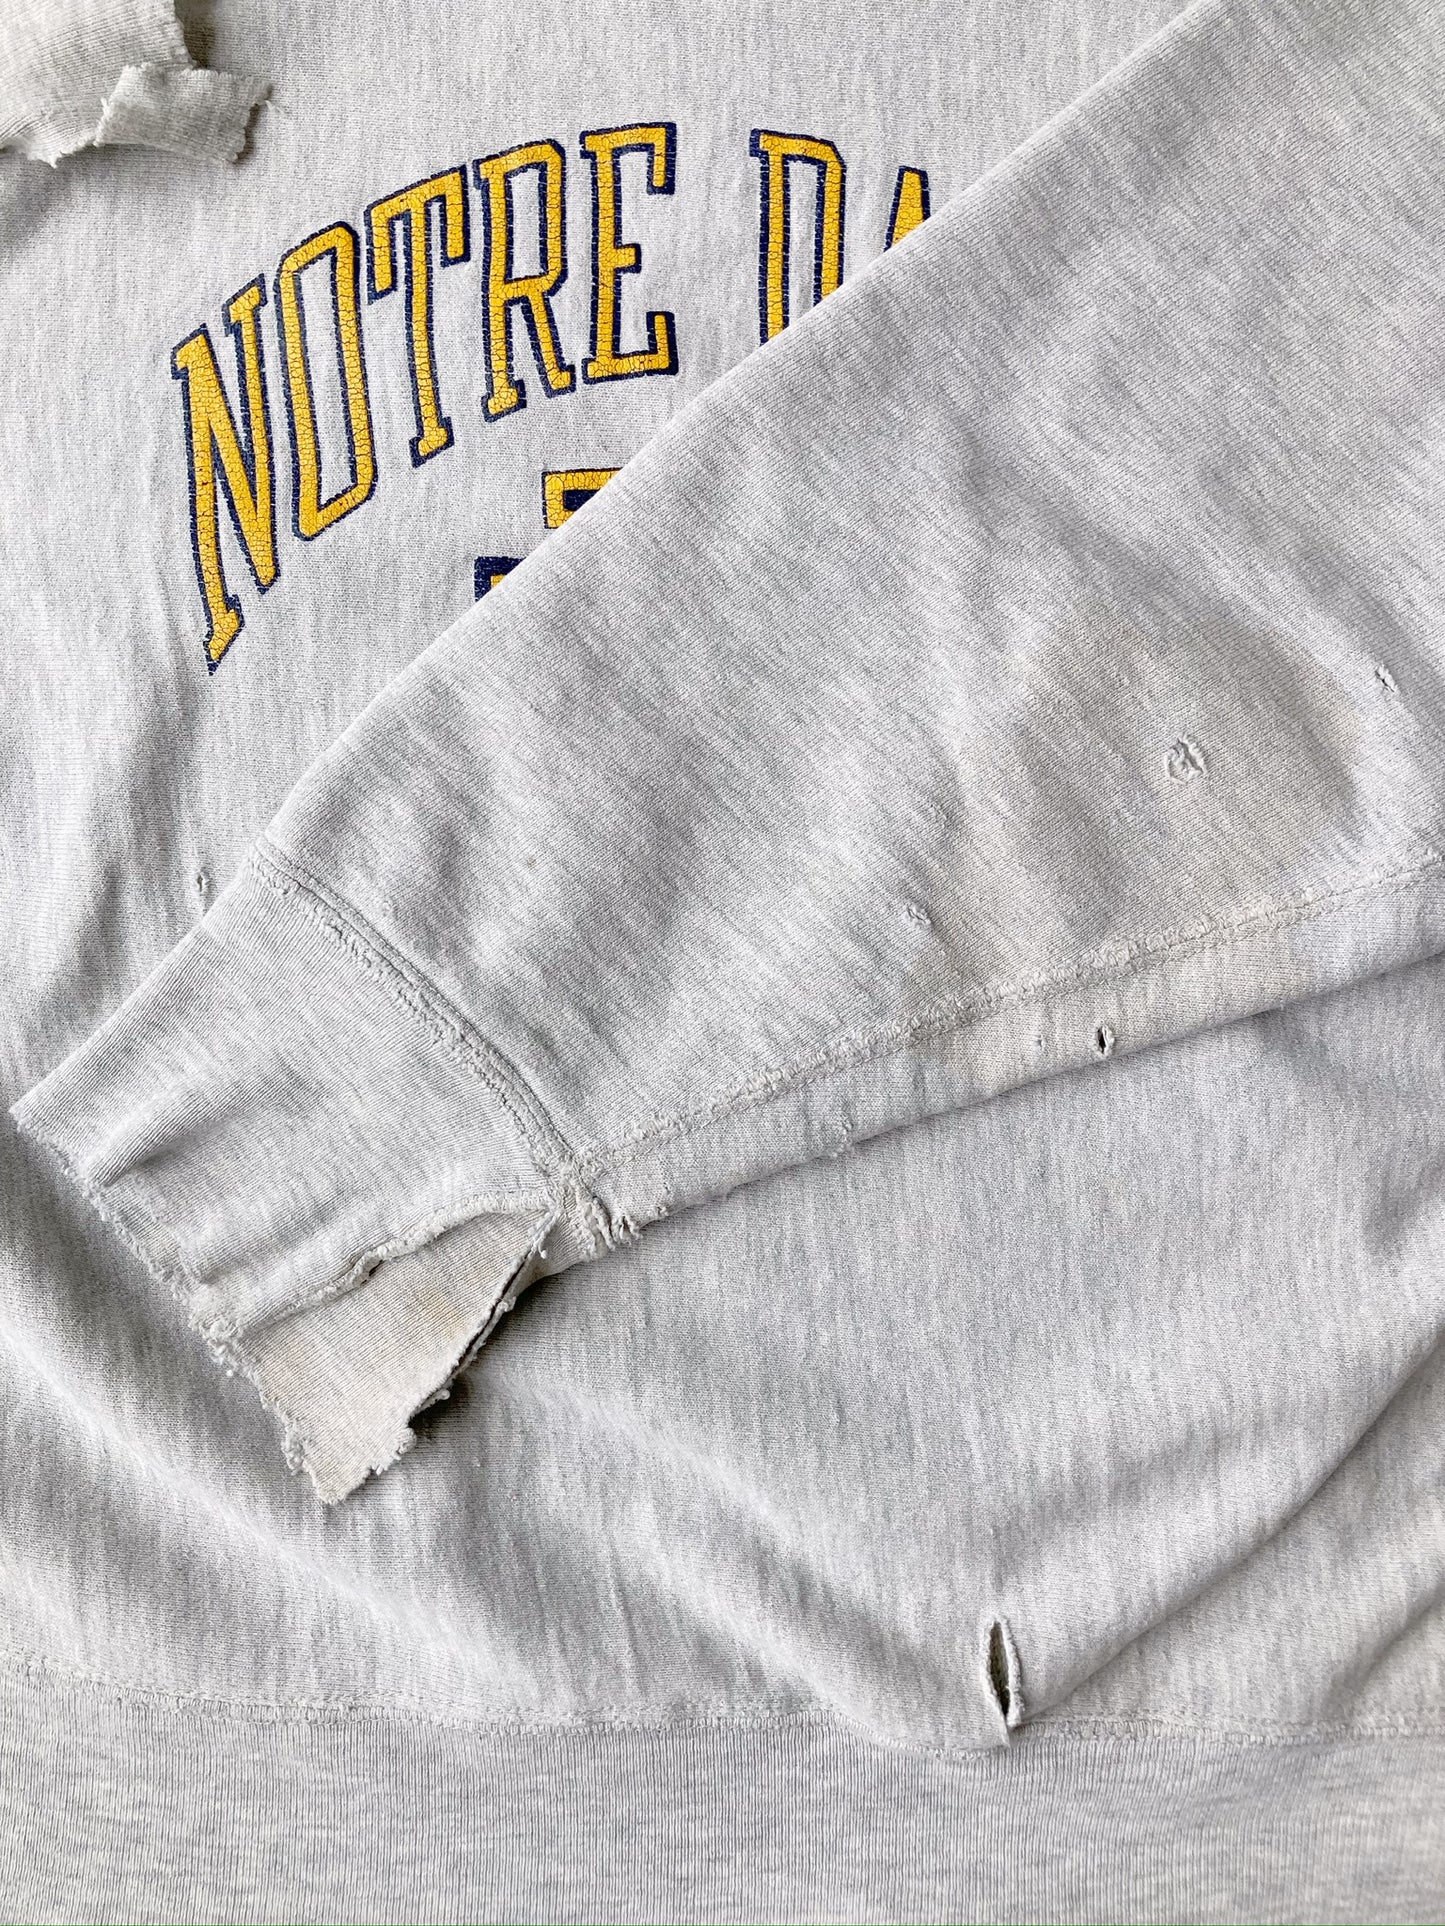 Notre Dame Sweatshirt 80's - Large